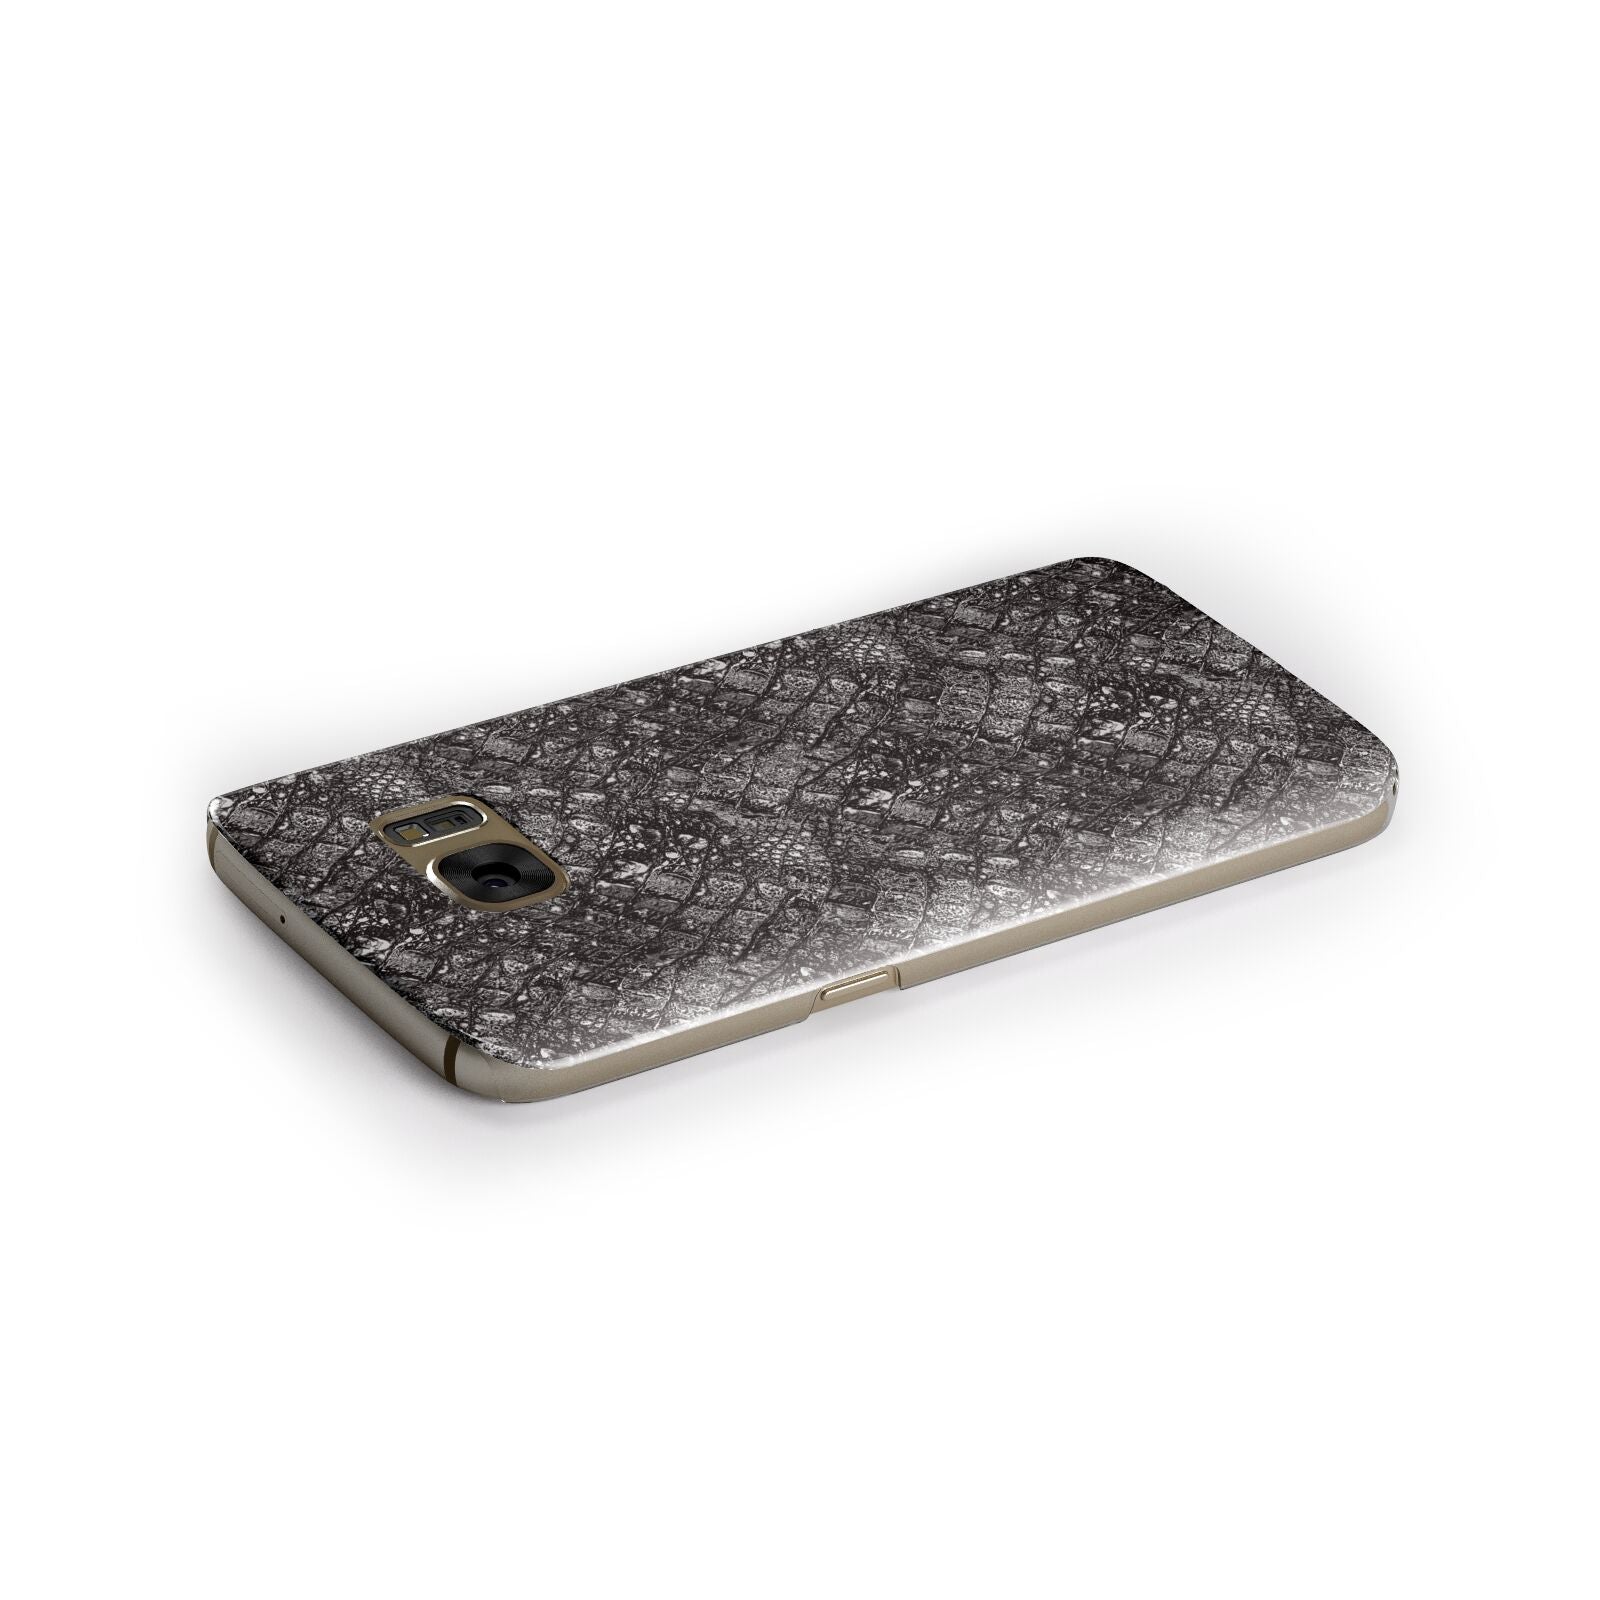 Snakeskin Design Samsung Galaxy Case Side Close Up